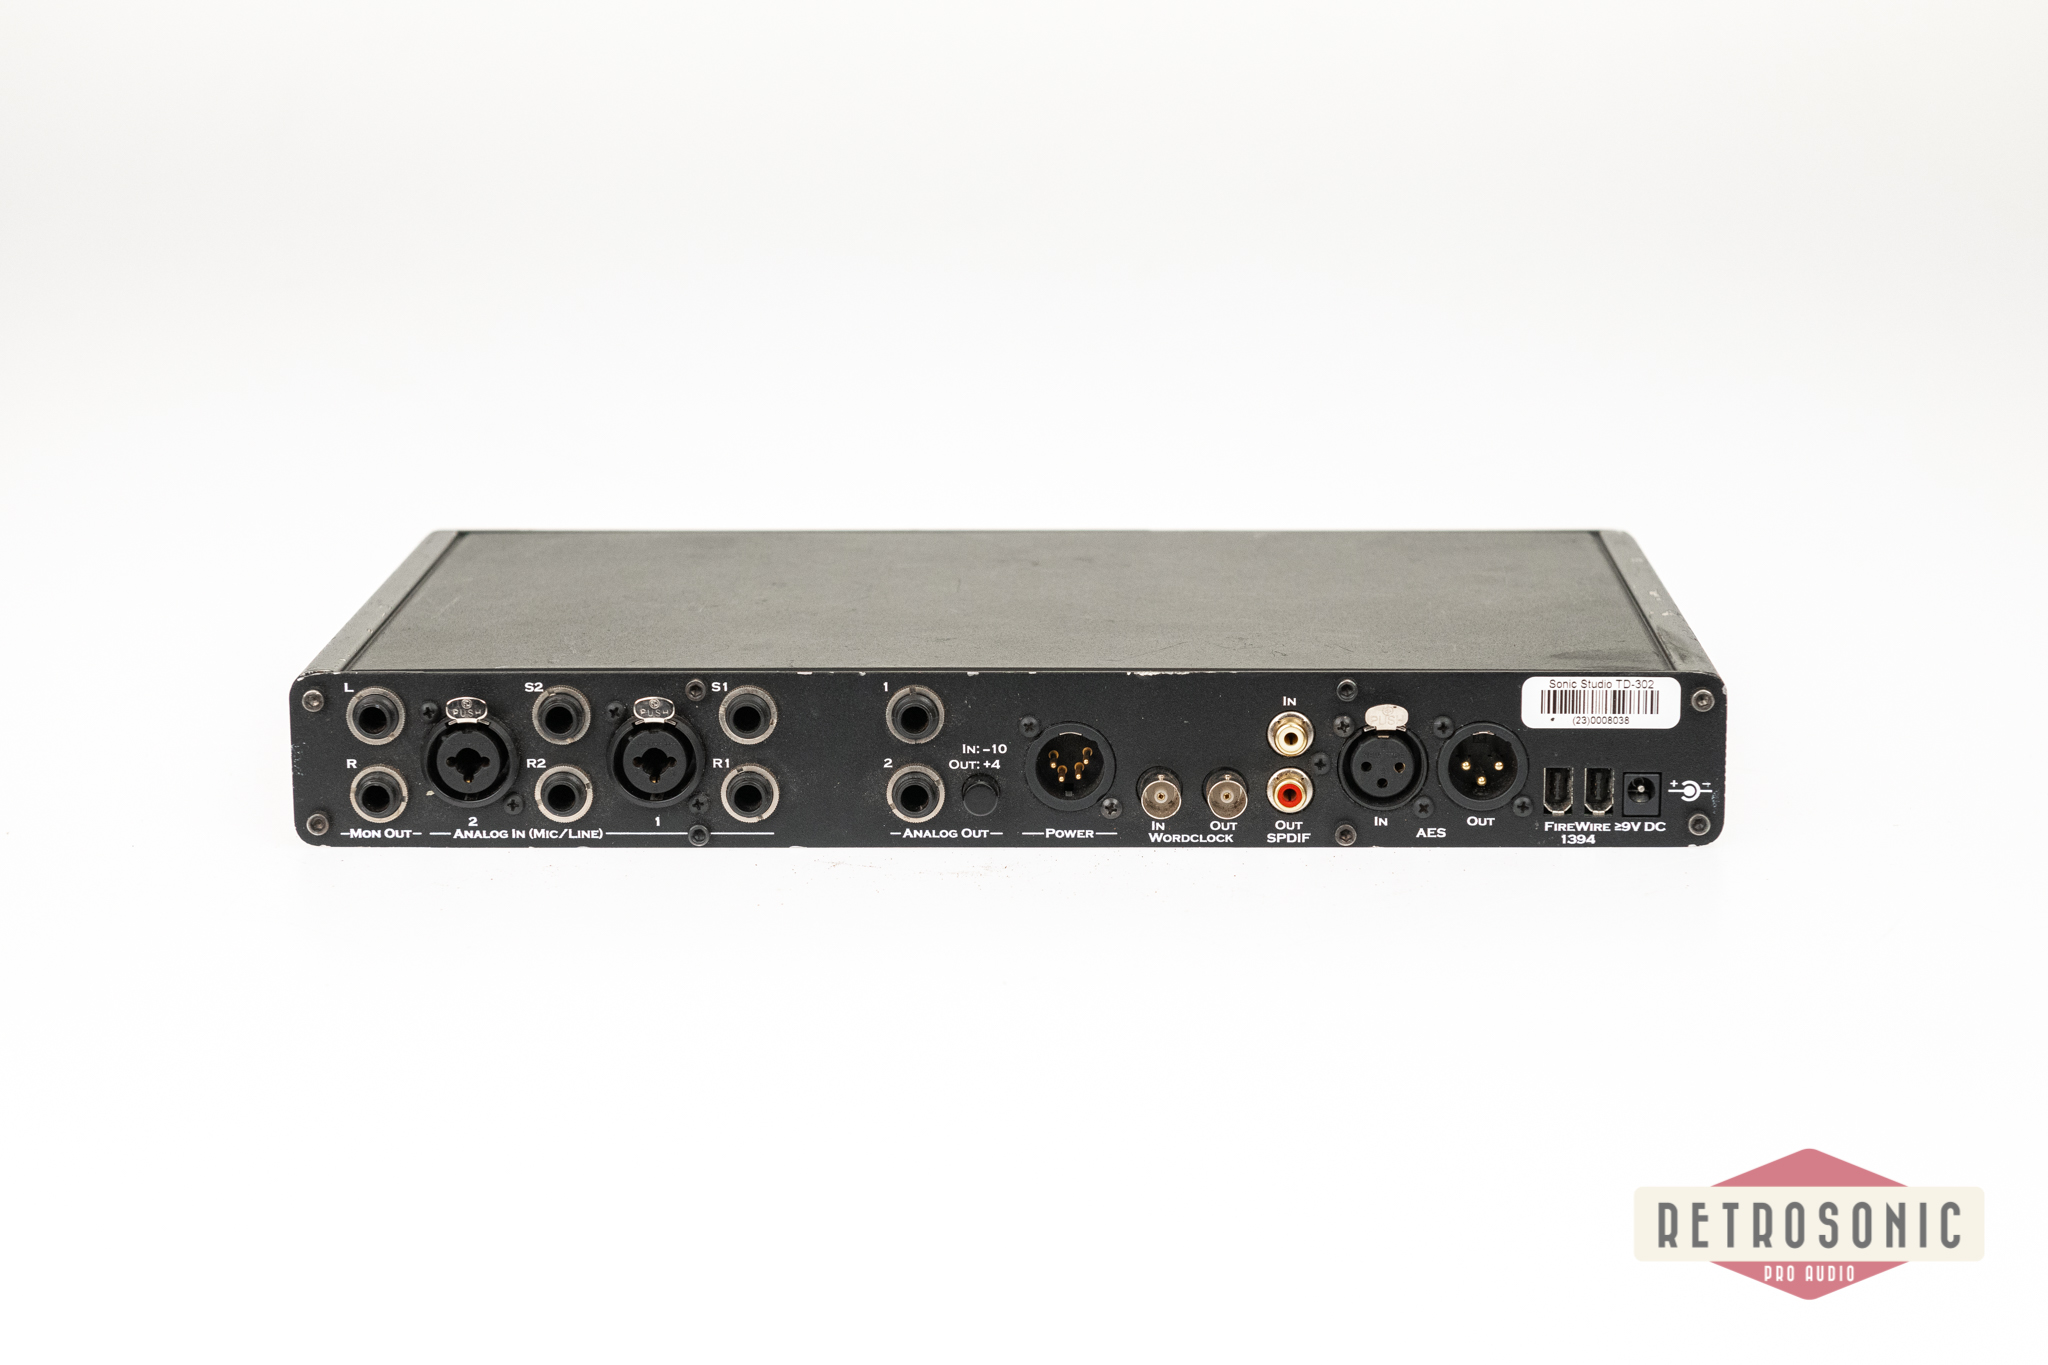 Sonic Studio Model 302 DSP I/O 2-ch Audio Interface (Metric Halo ULN-2)